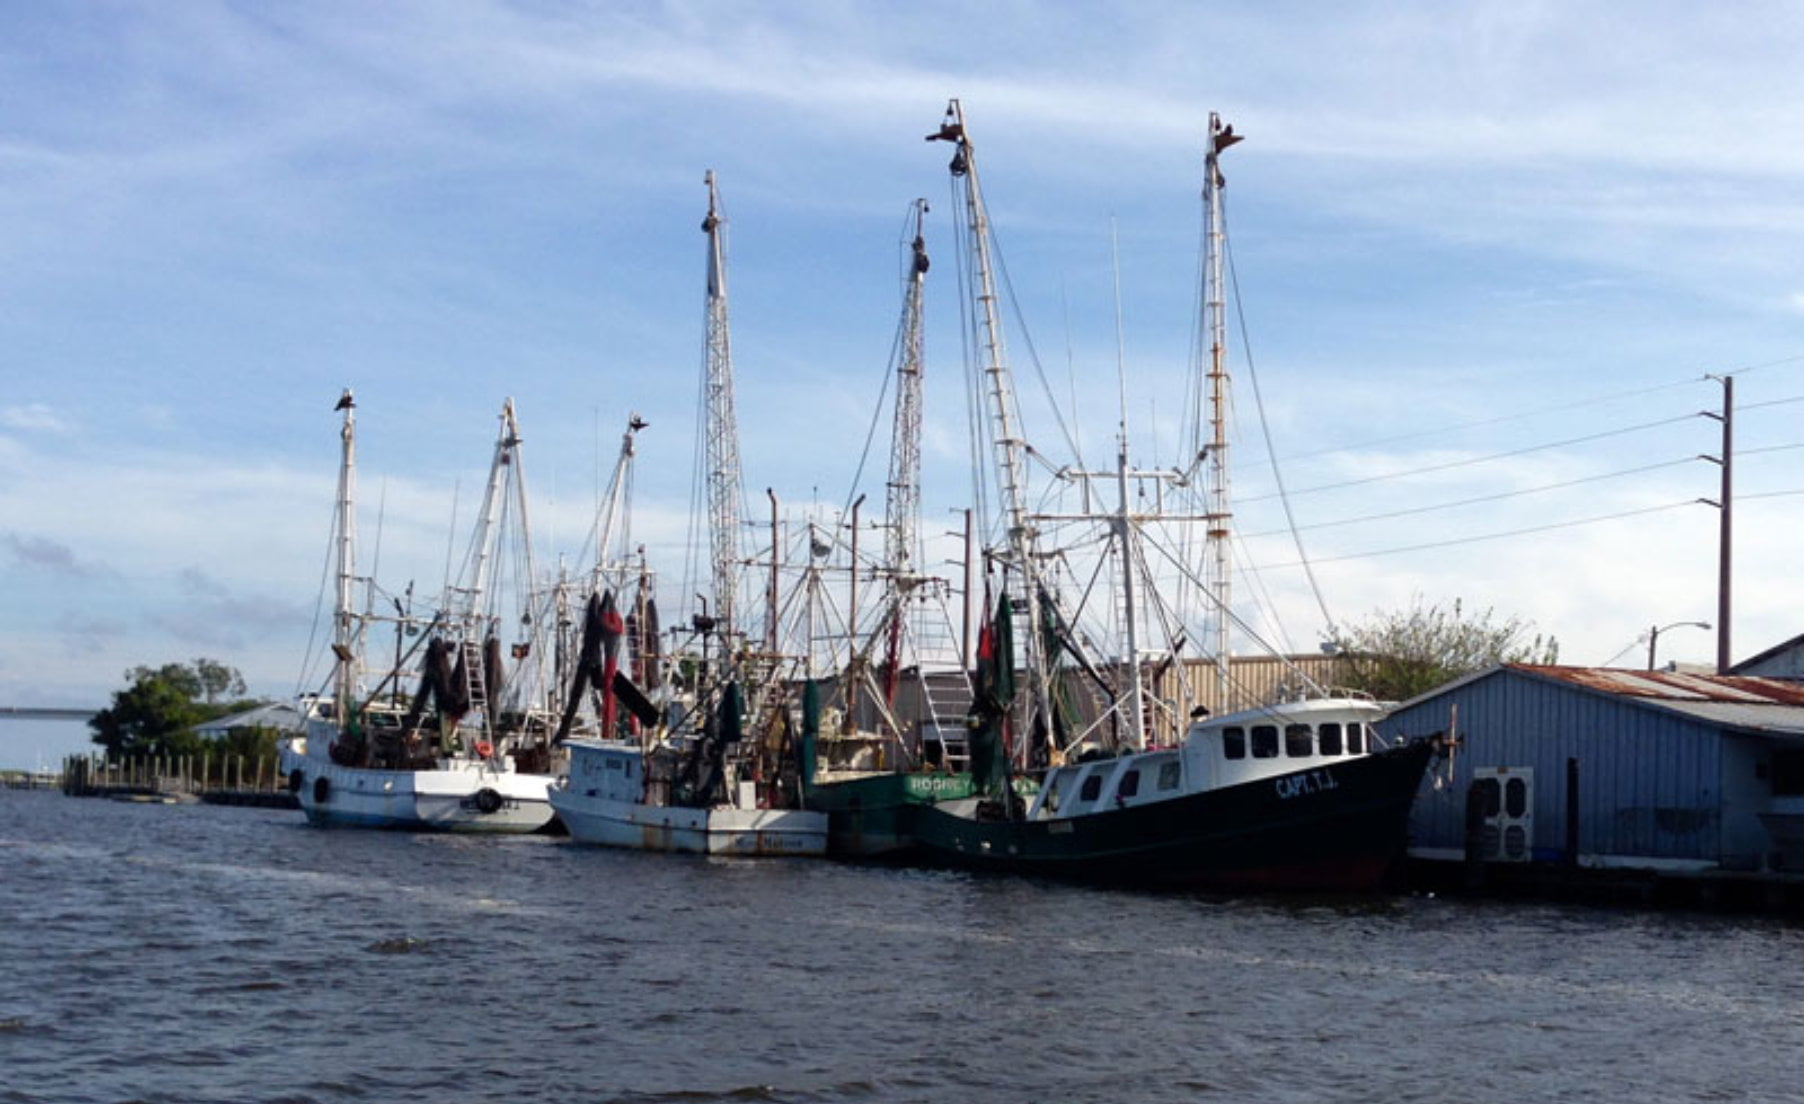 Apalachicola shrimp boats